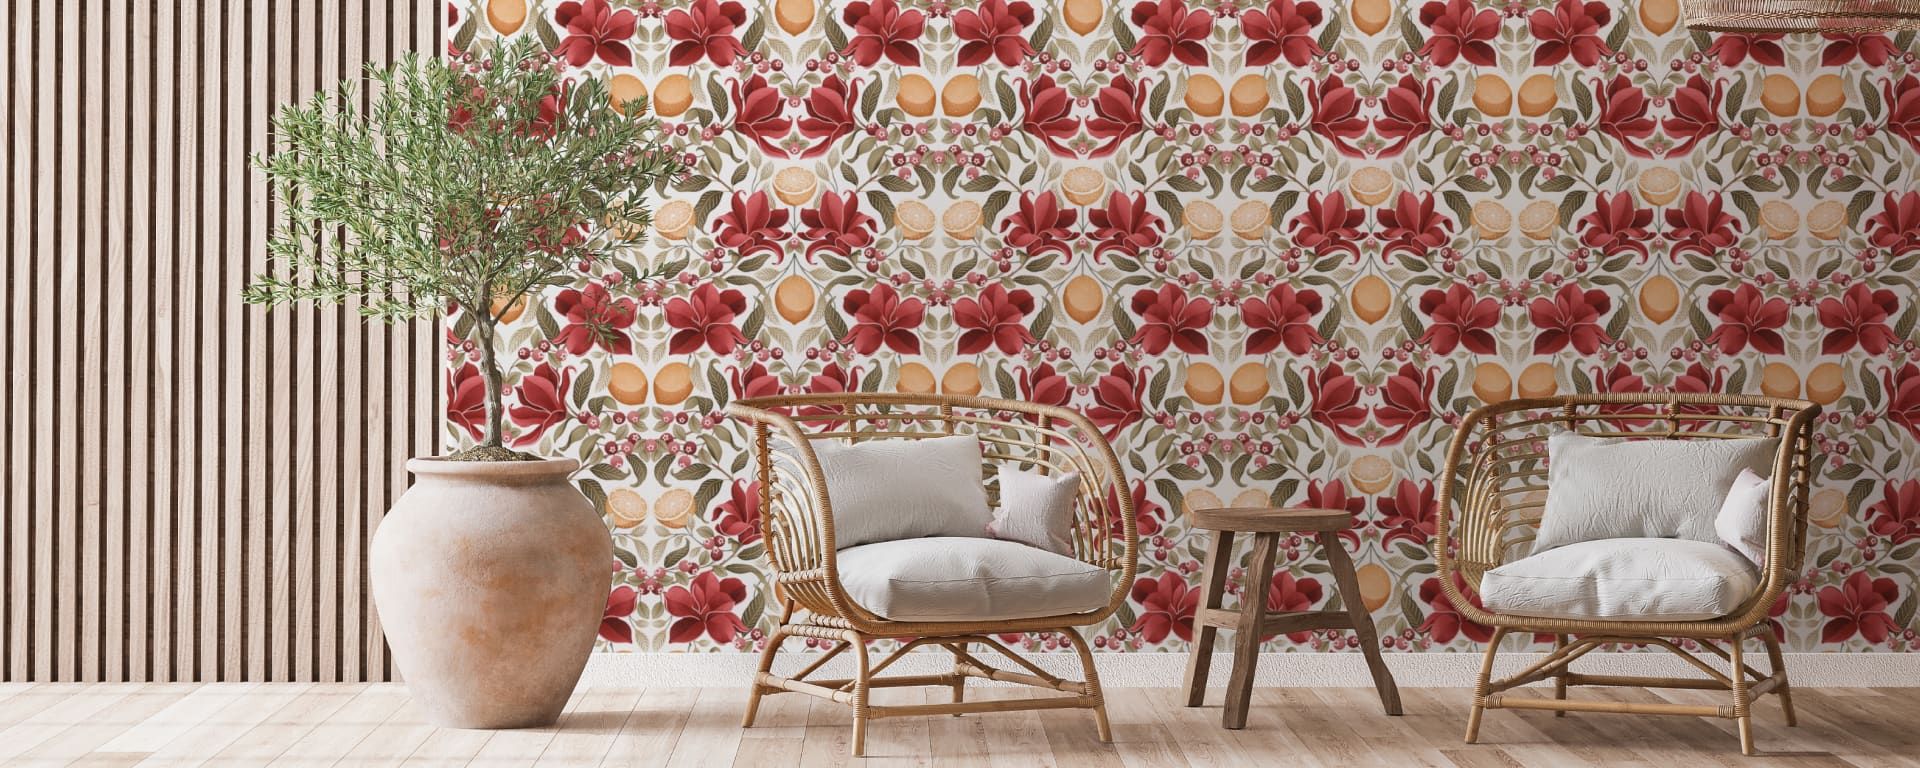 Lemons and Magnolia Wallpaper - by Wallpaper Republic - Colorway: Crimson and Olive - Hero Image - Insitu